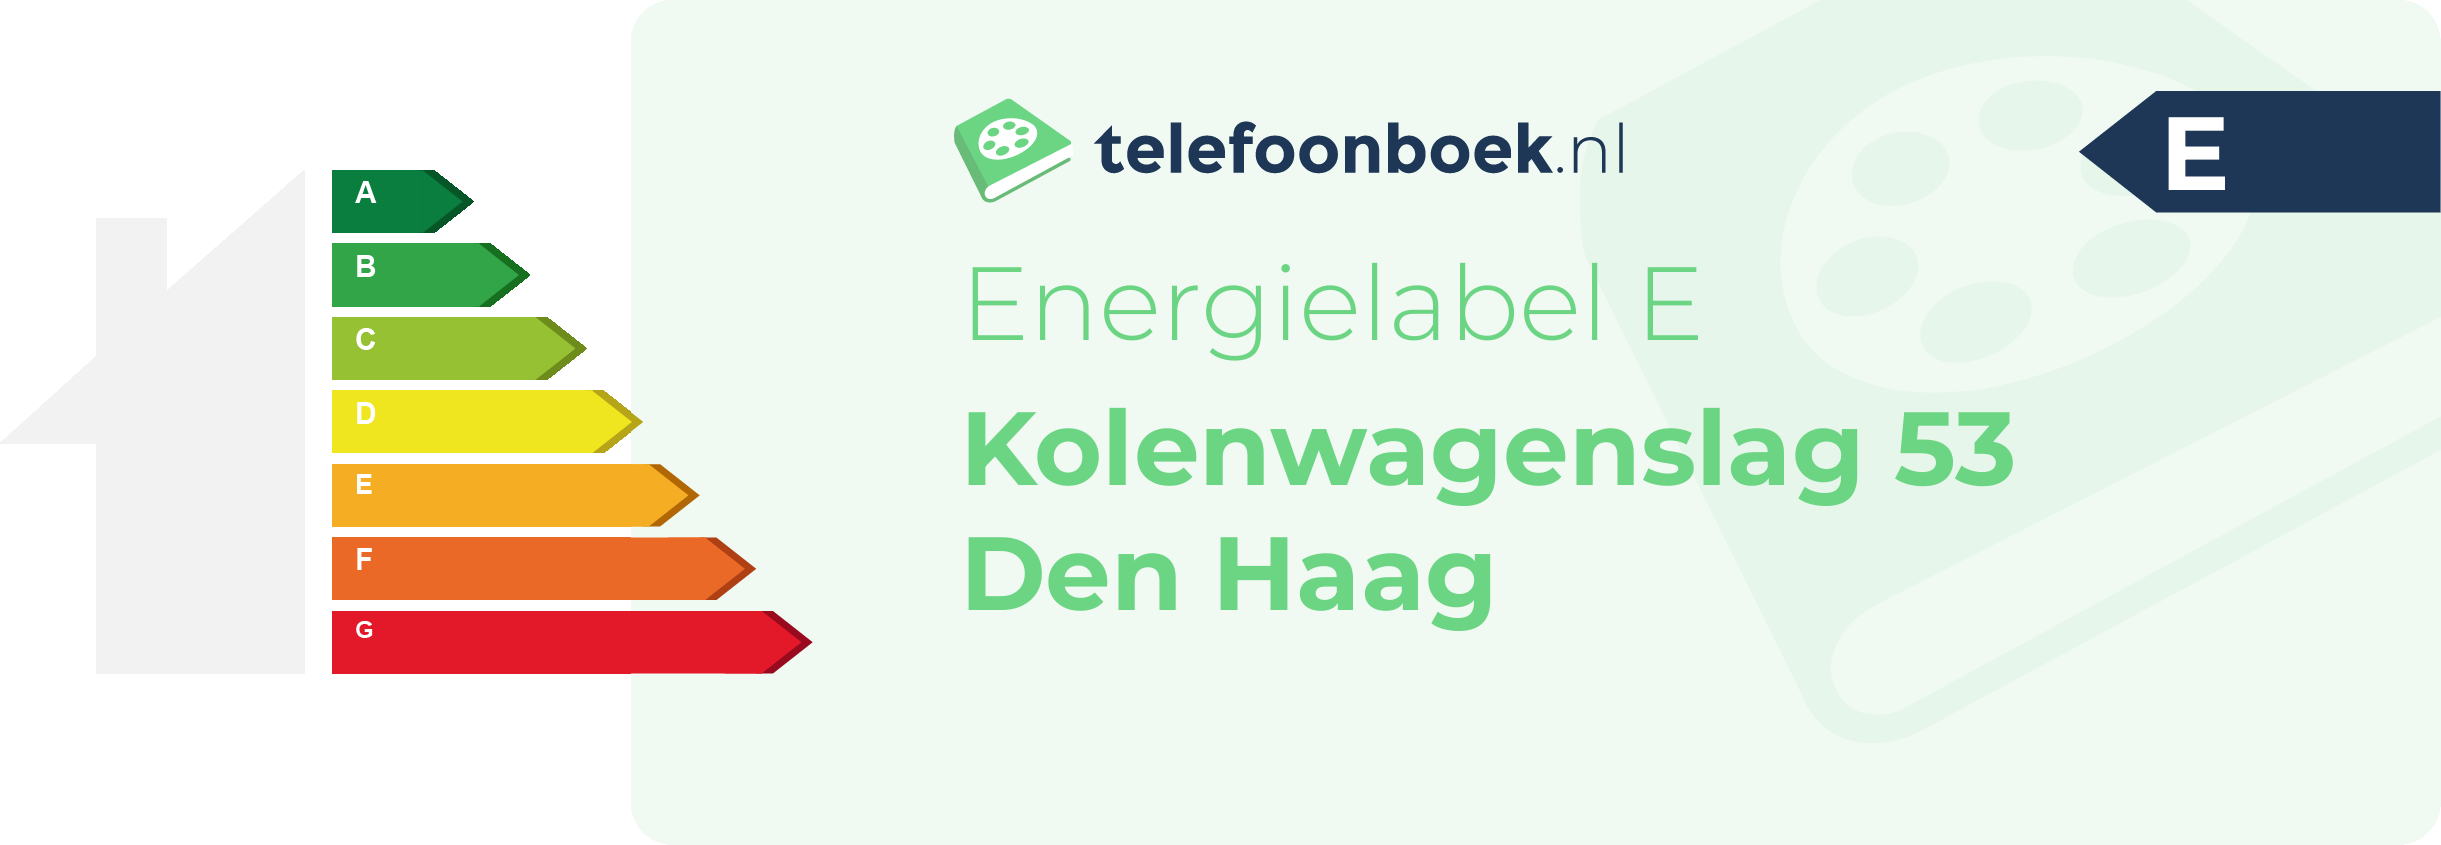 Energielabel Kolenwagenslag 53 Den Haag